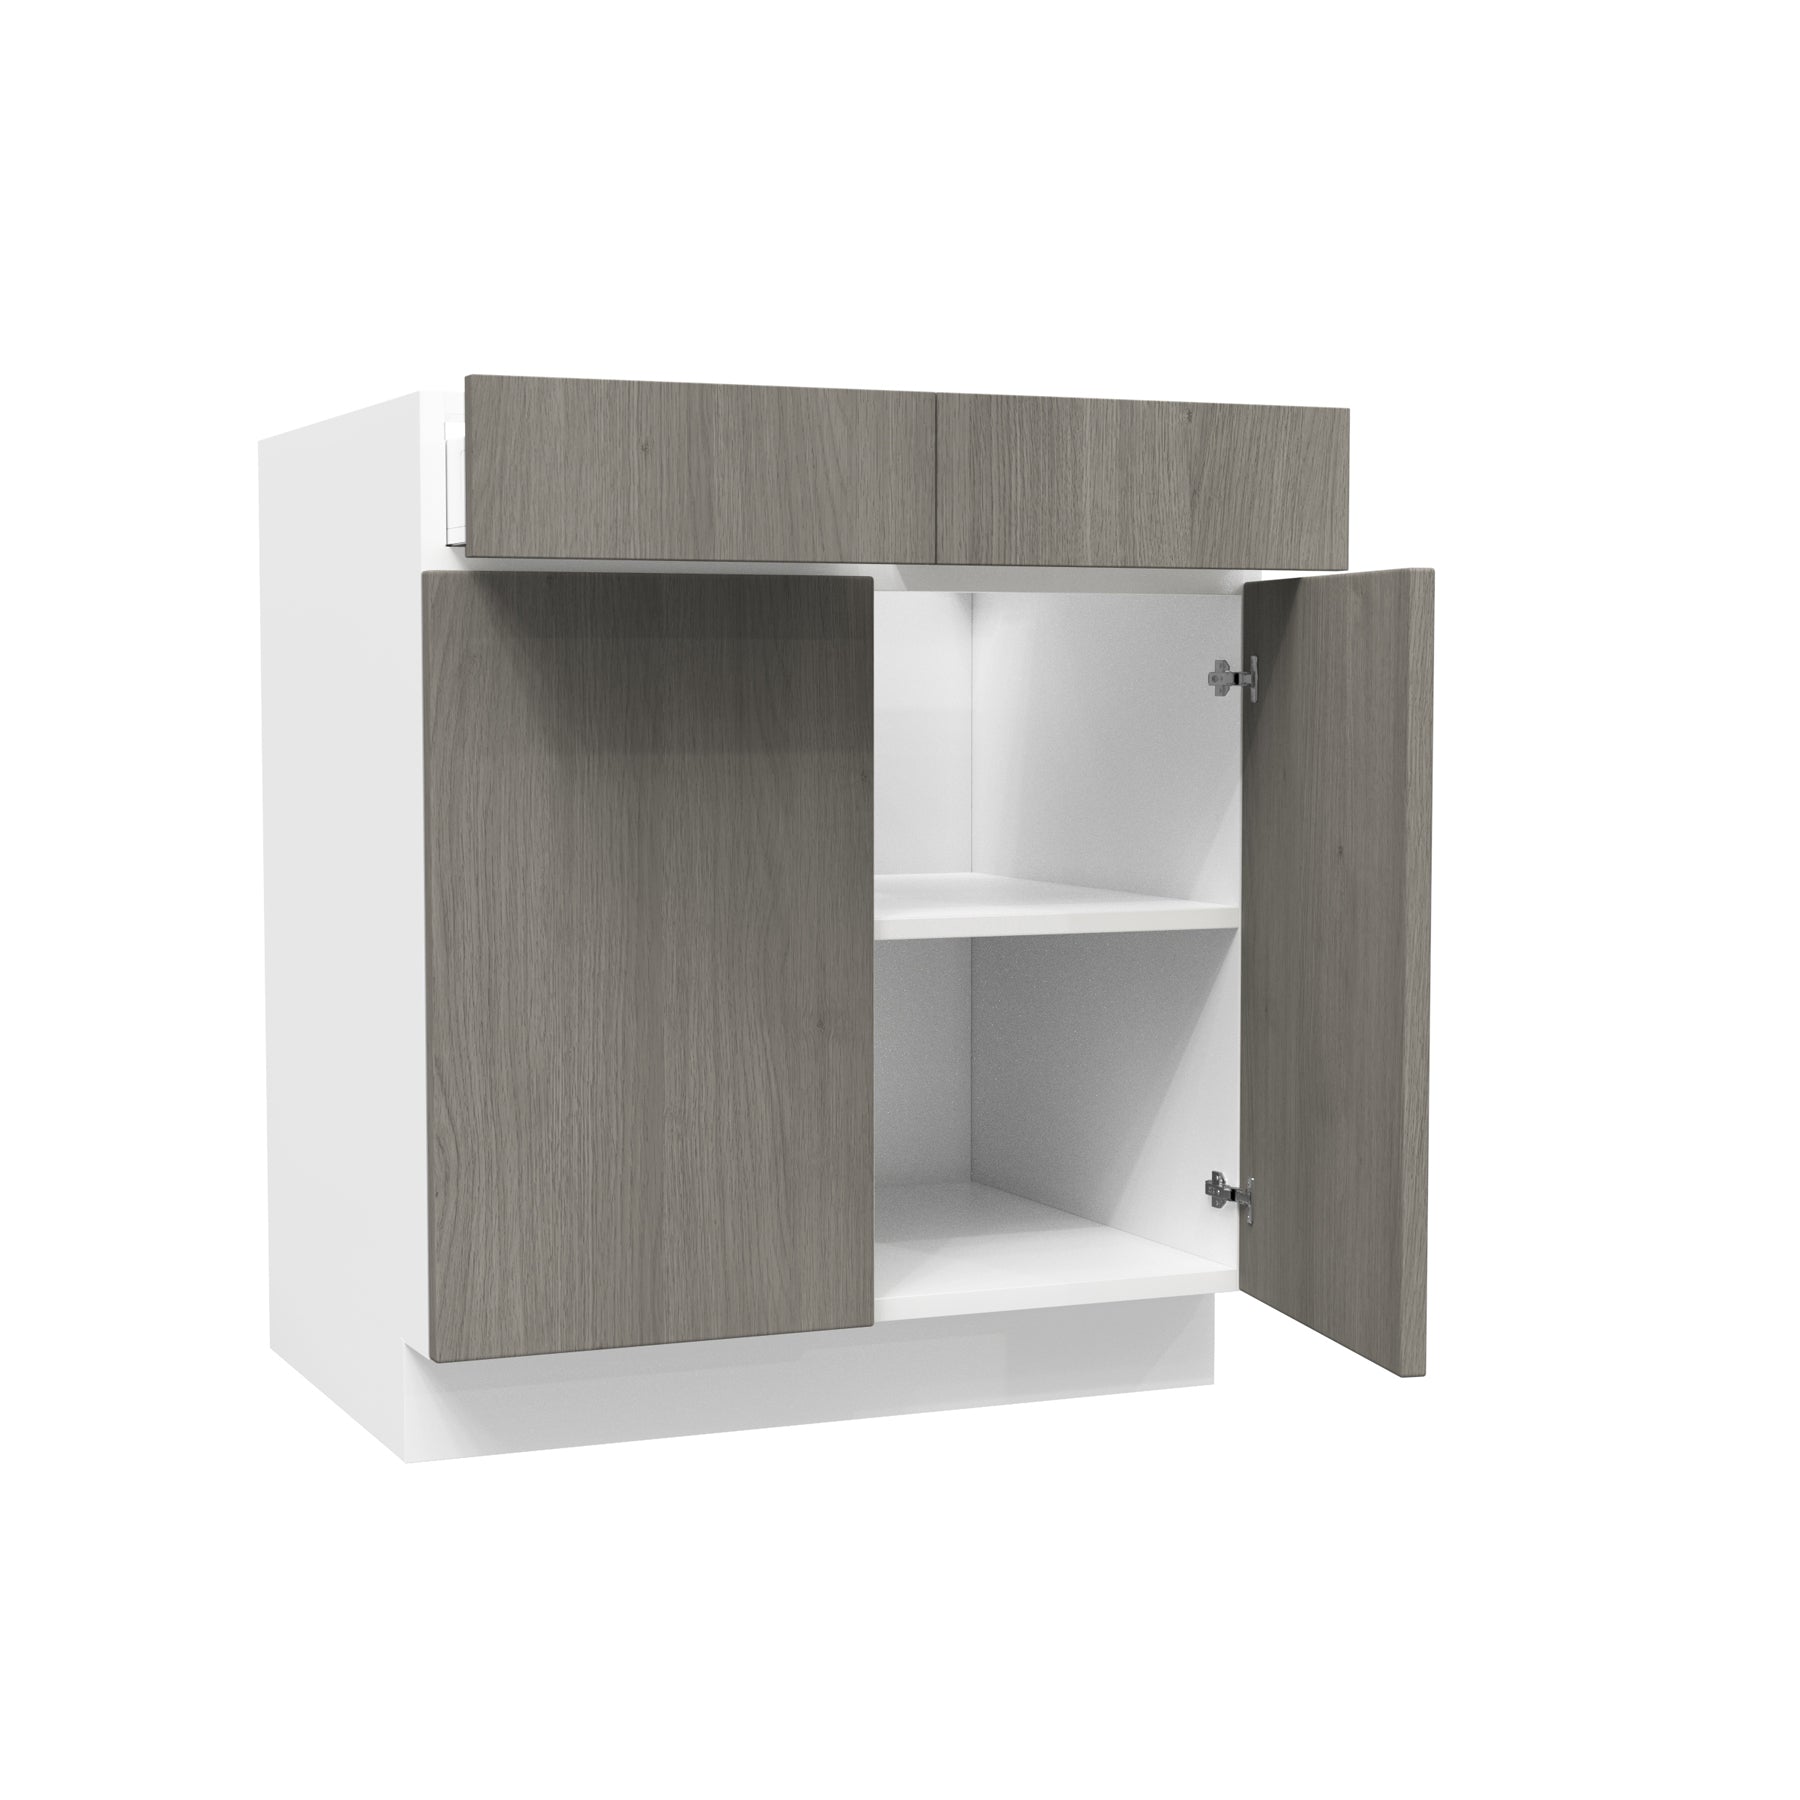 2 Door Base Cabinet| Matrix Silver | 30W x 34.5H x 24D